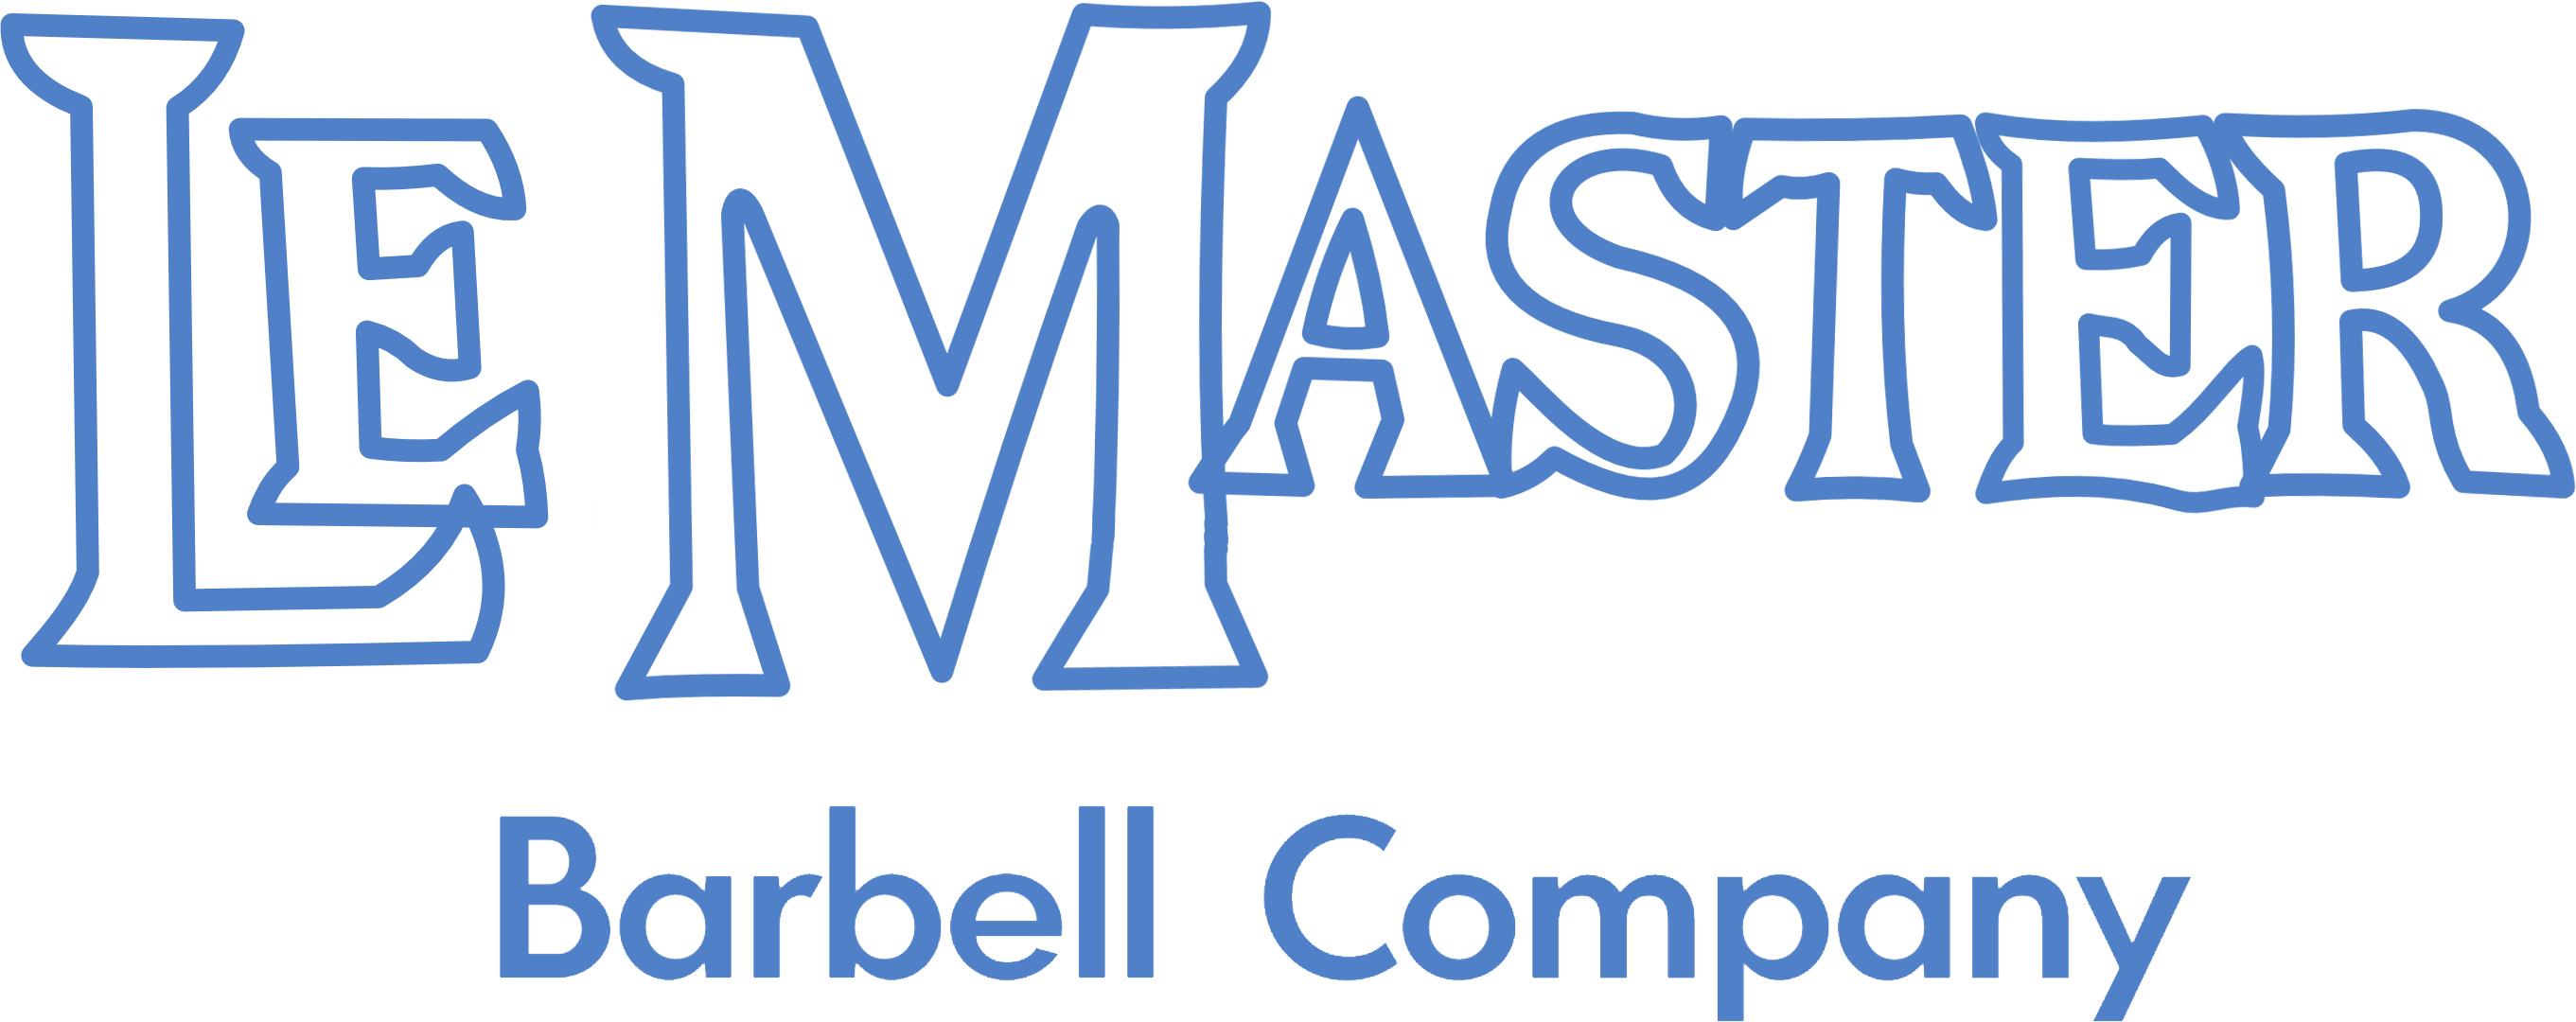 Le Master Barbell Company